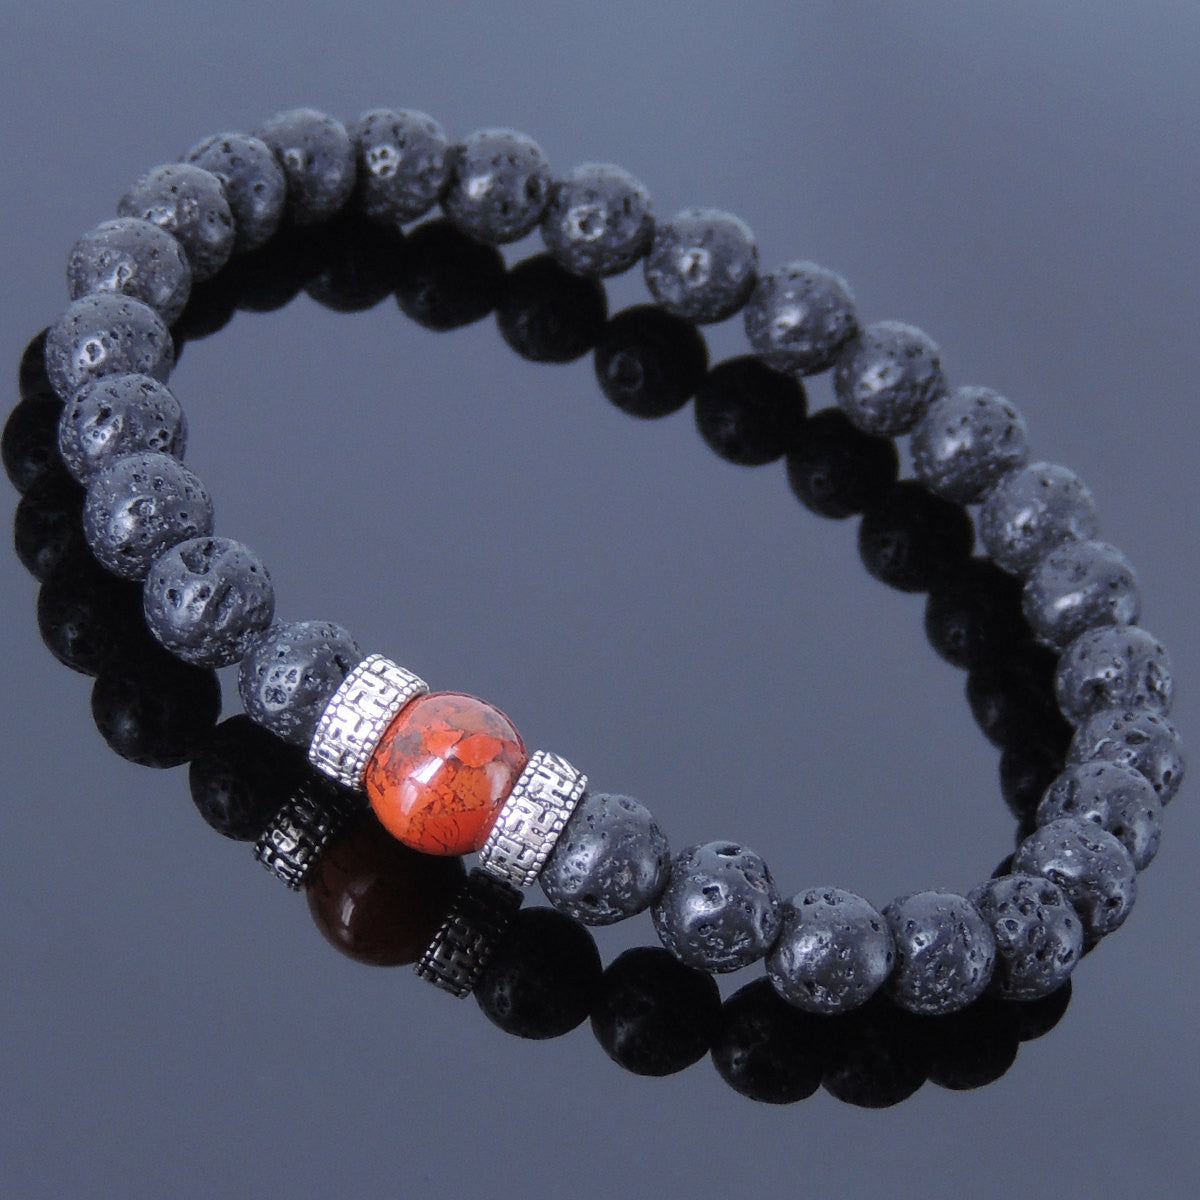 Red Jasper & Lava Rock Healing Gemstone Bracelet with S925 Sterling Silver Buddhism Spacer Beads - Handmade by Gem & Silver BR388